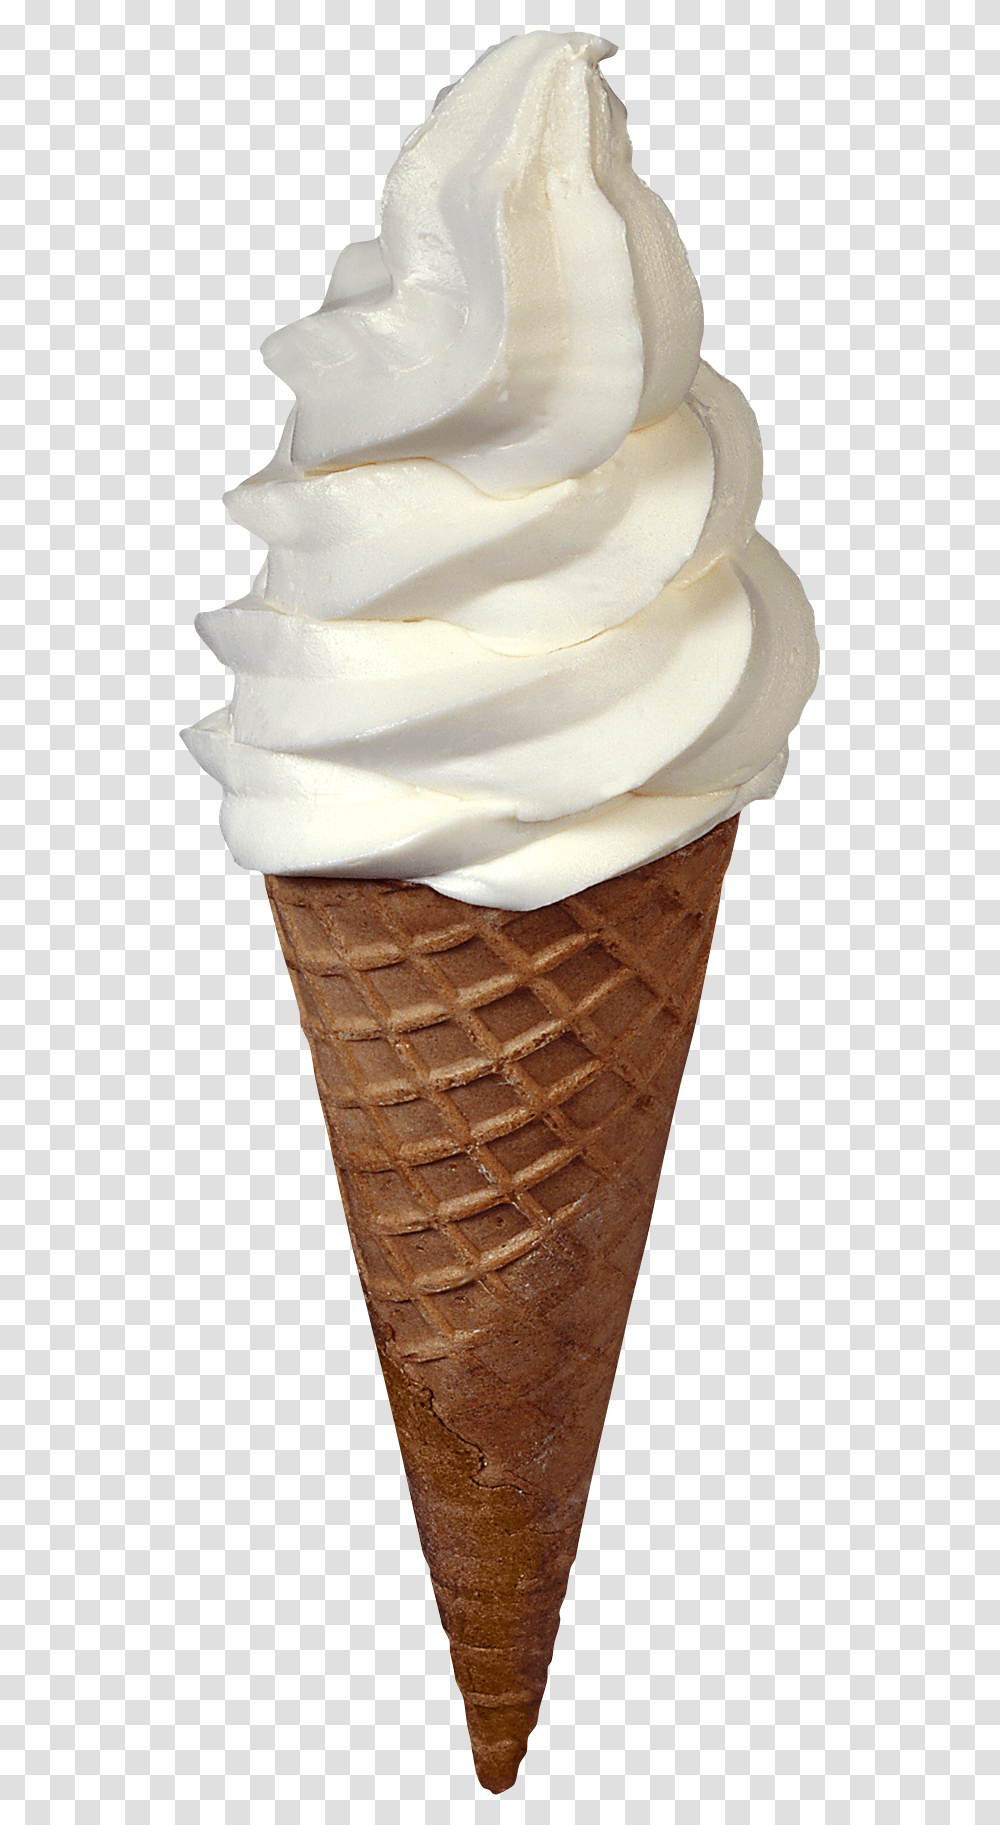 Ice Cream Image Frozen Yogurt On A Cone, Dessert, Food, Creme, Wedding Cake Transparent Png